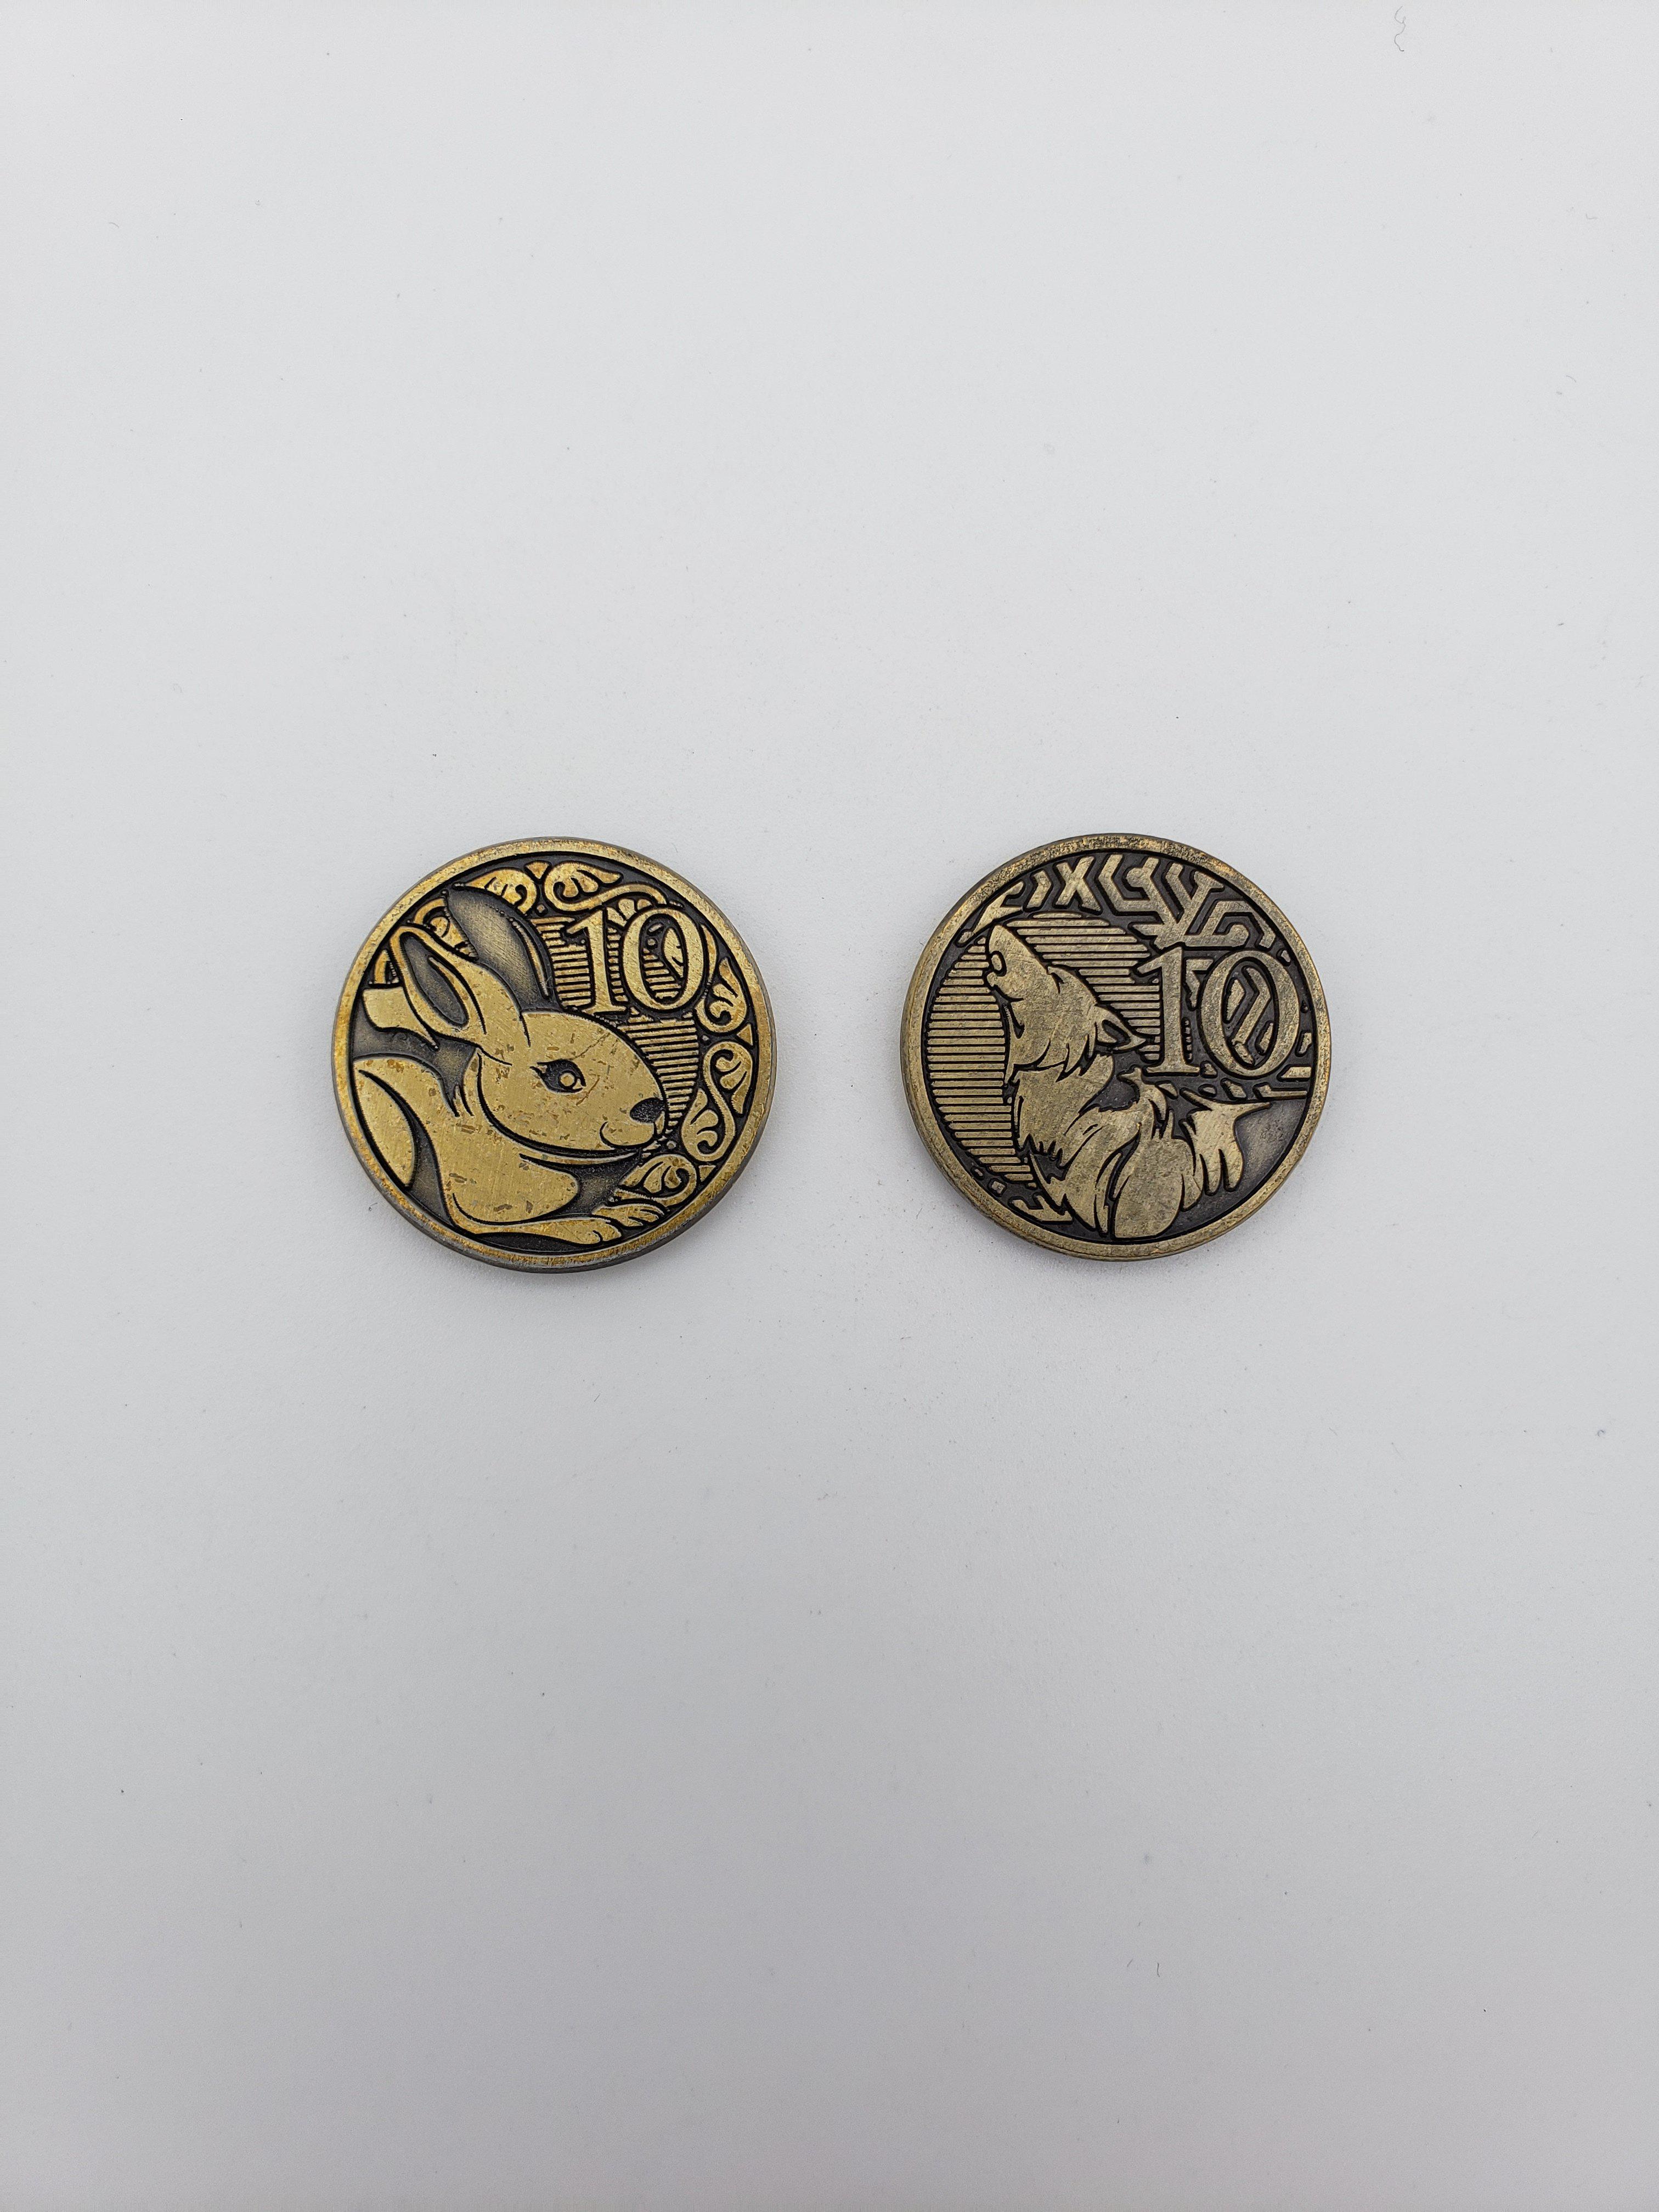 Adventure Coins - Predator or Prey Coins Set of 10 - NOR 03448_Parent